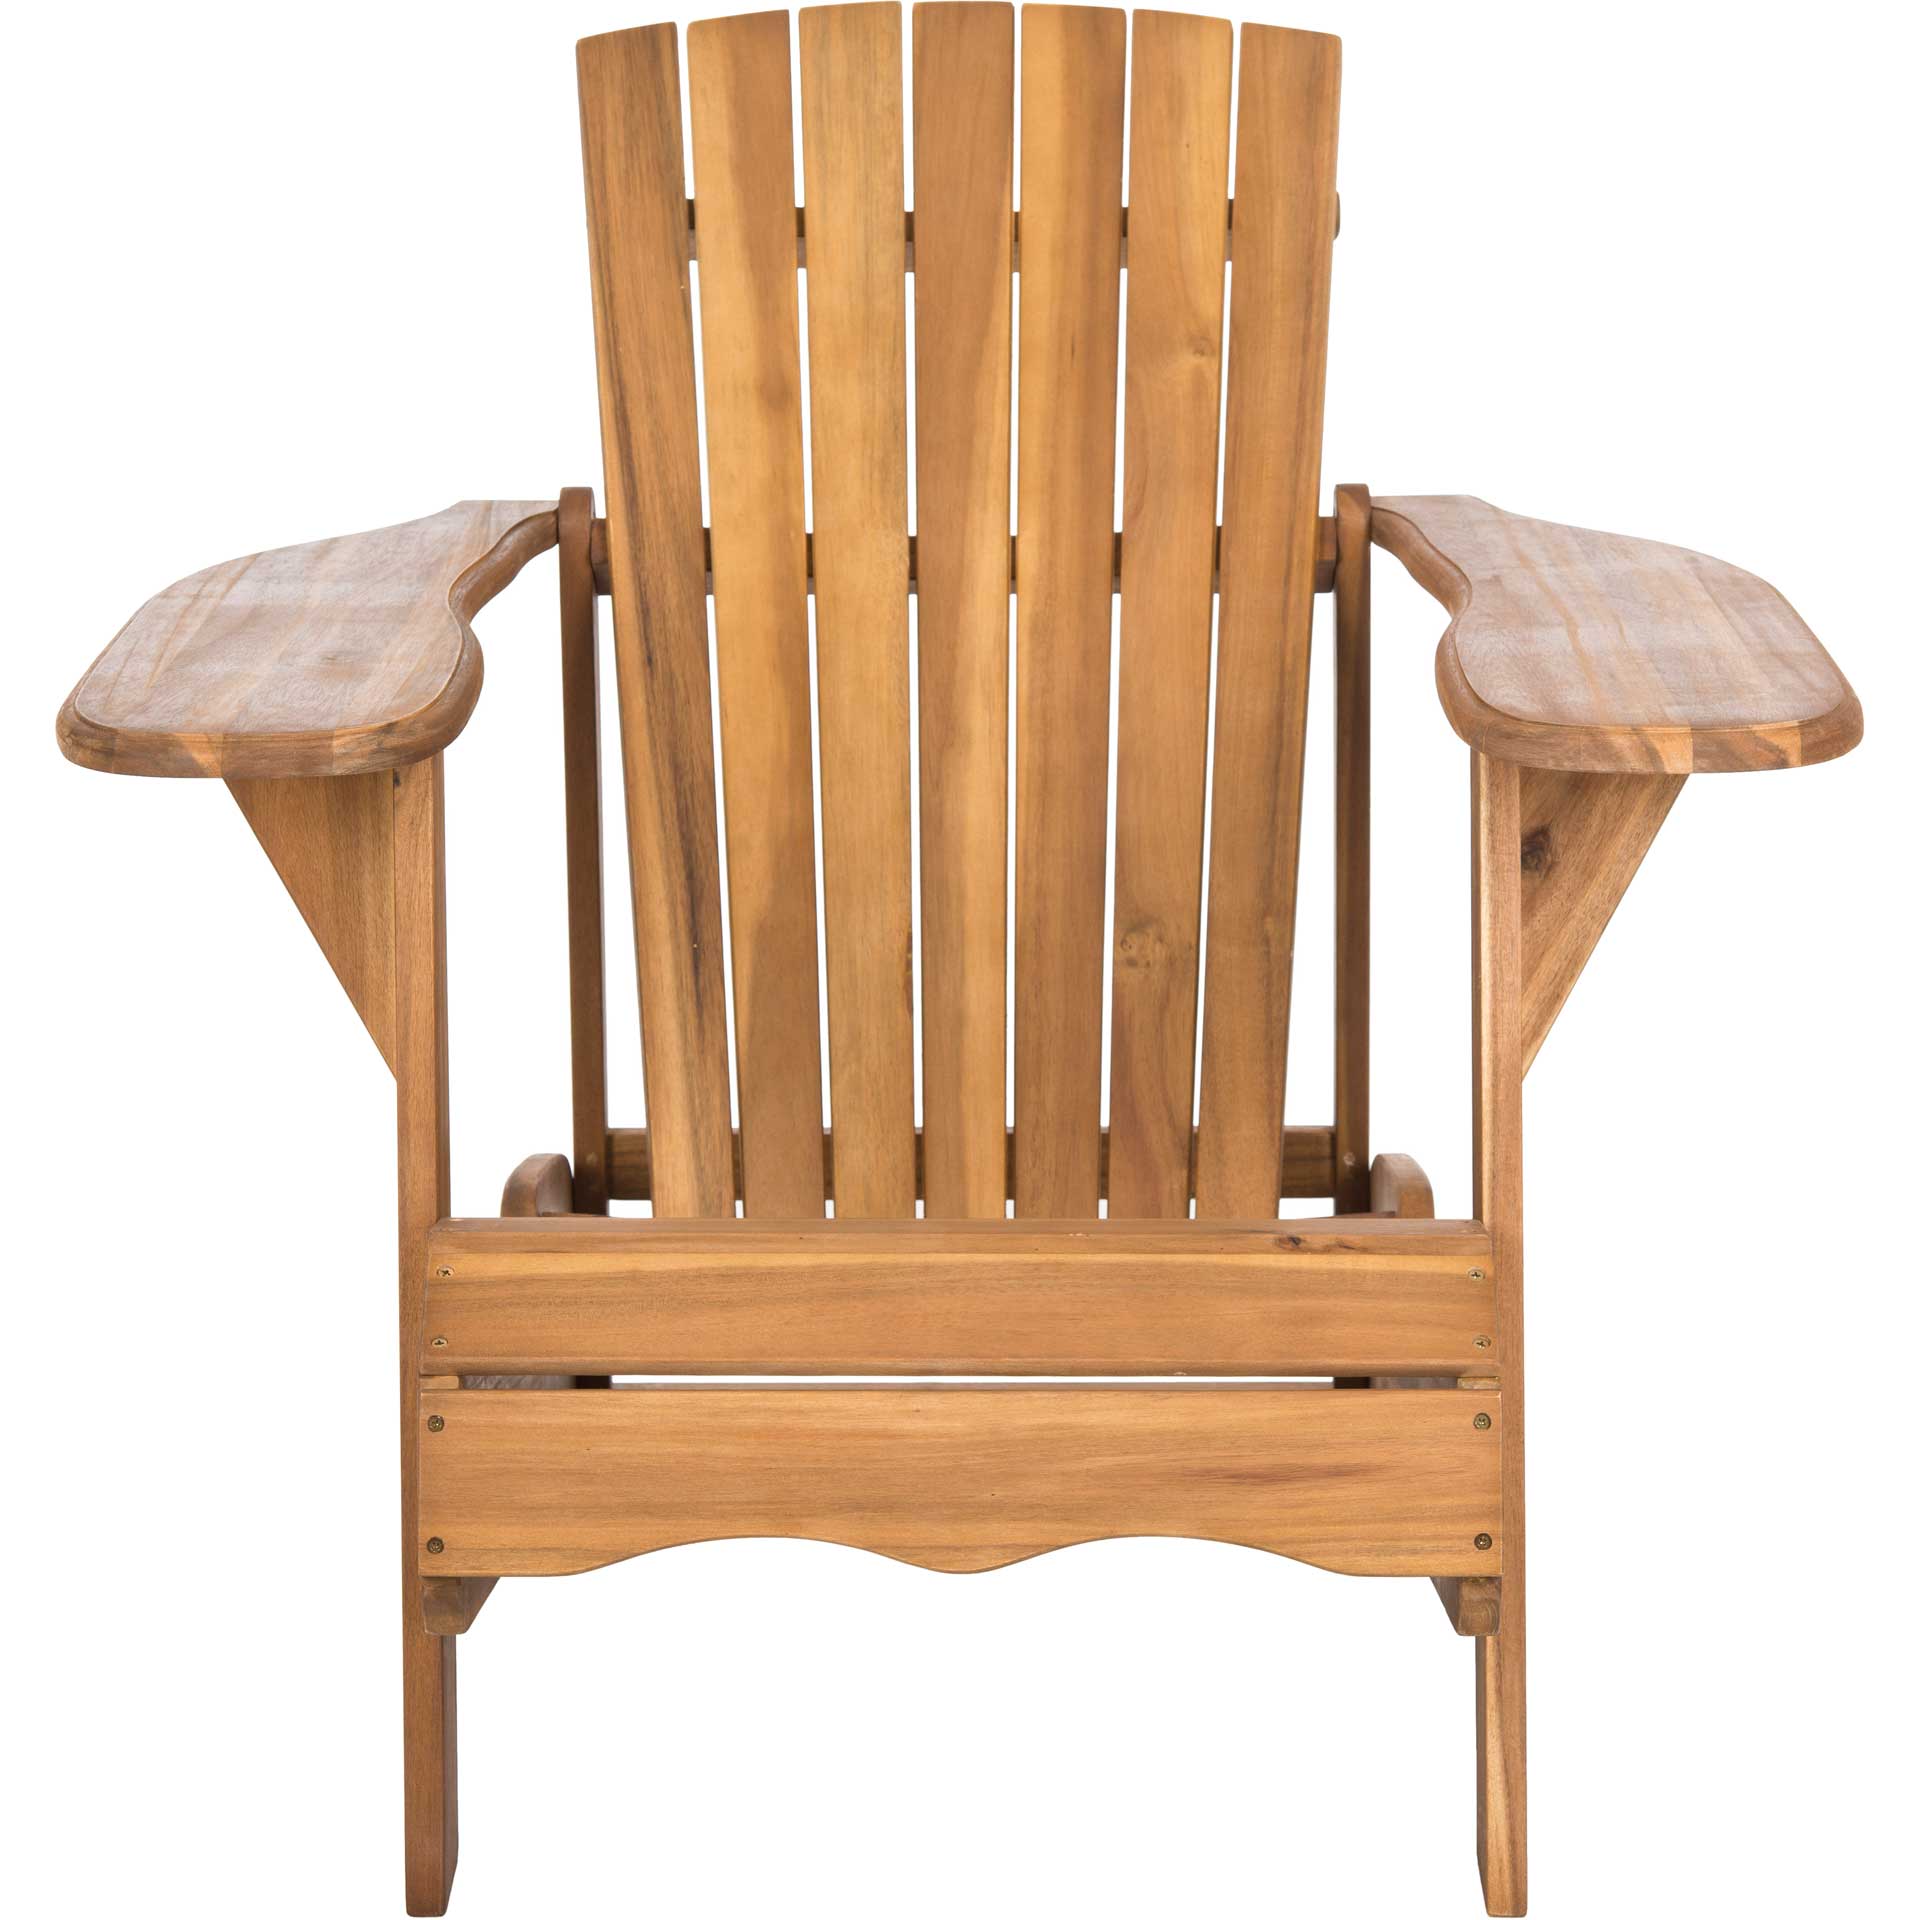 Montrelle Acacia Chair Natural